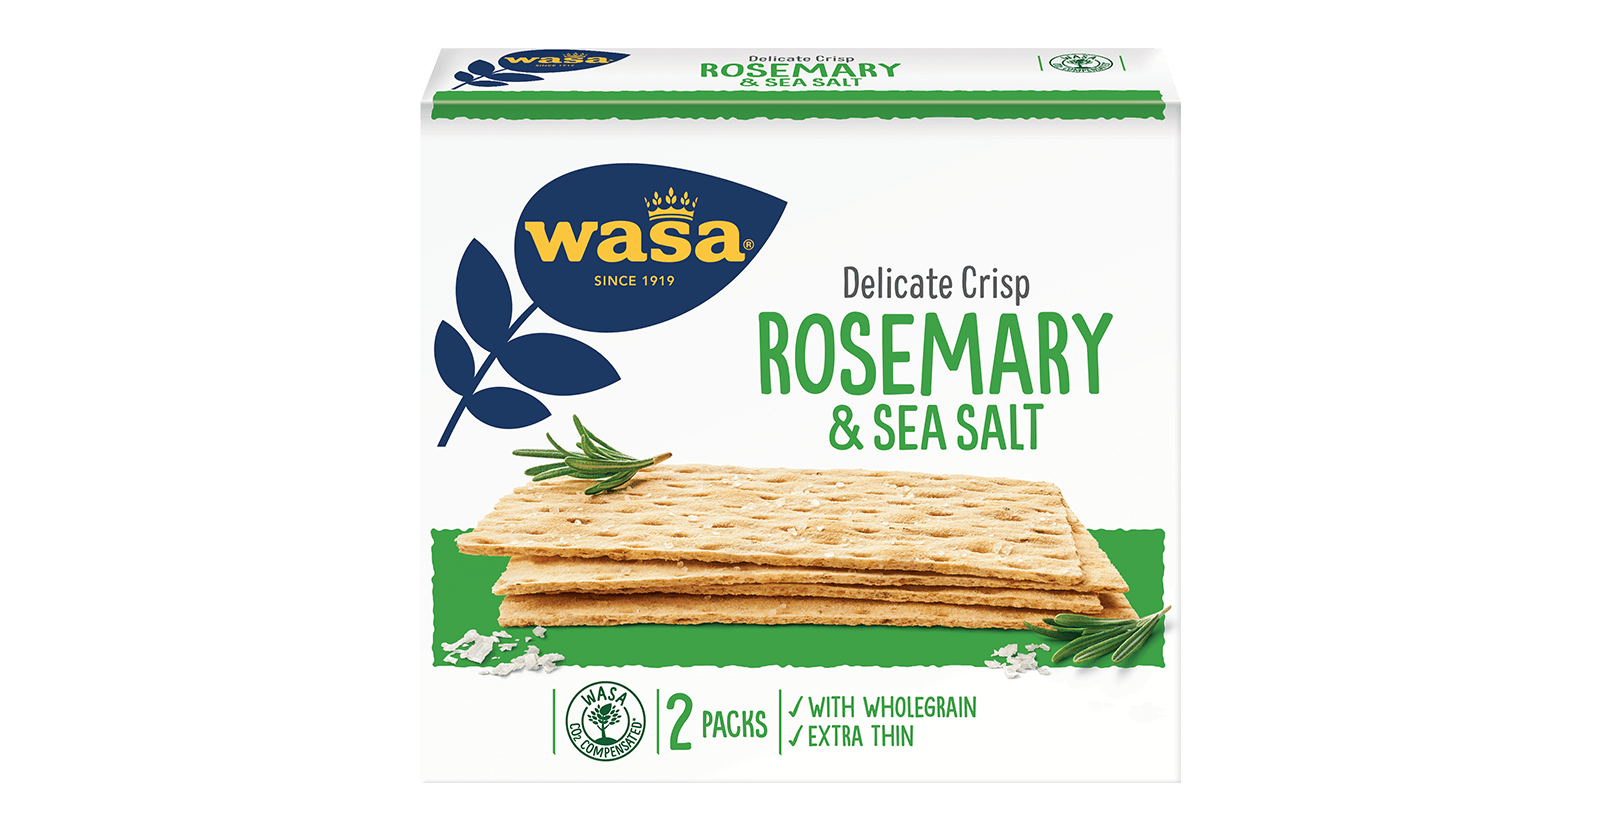 Delicate Crisp Rosemary & Sea Salt